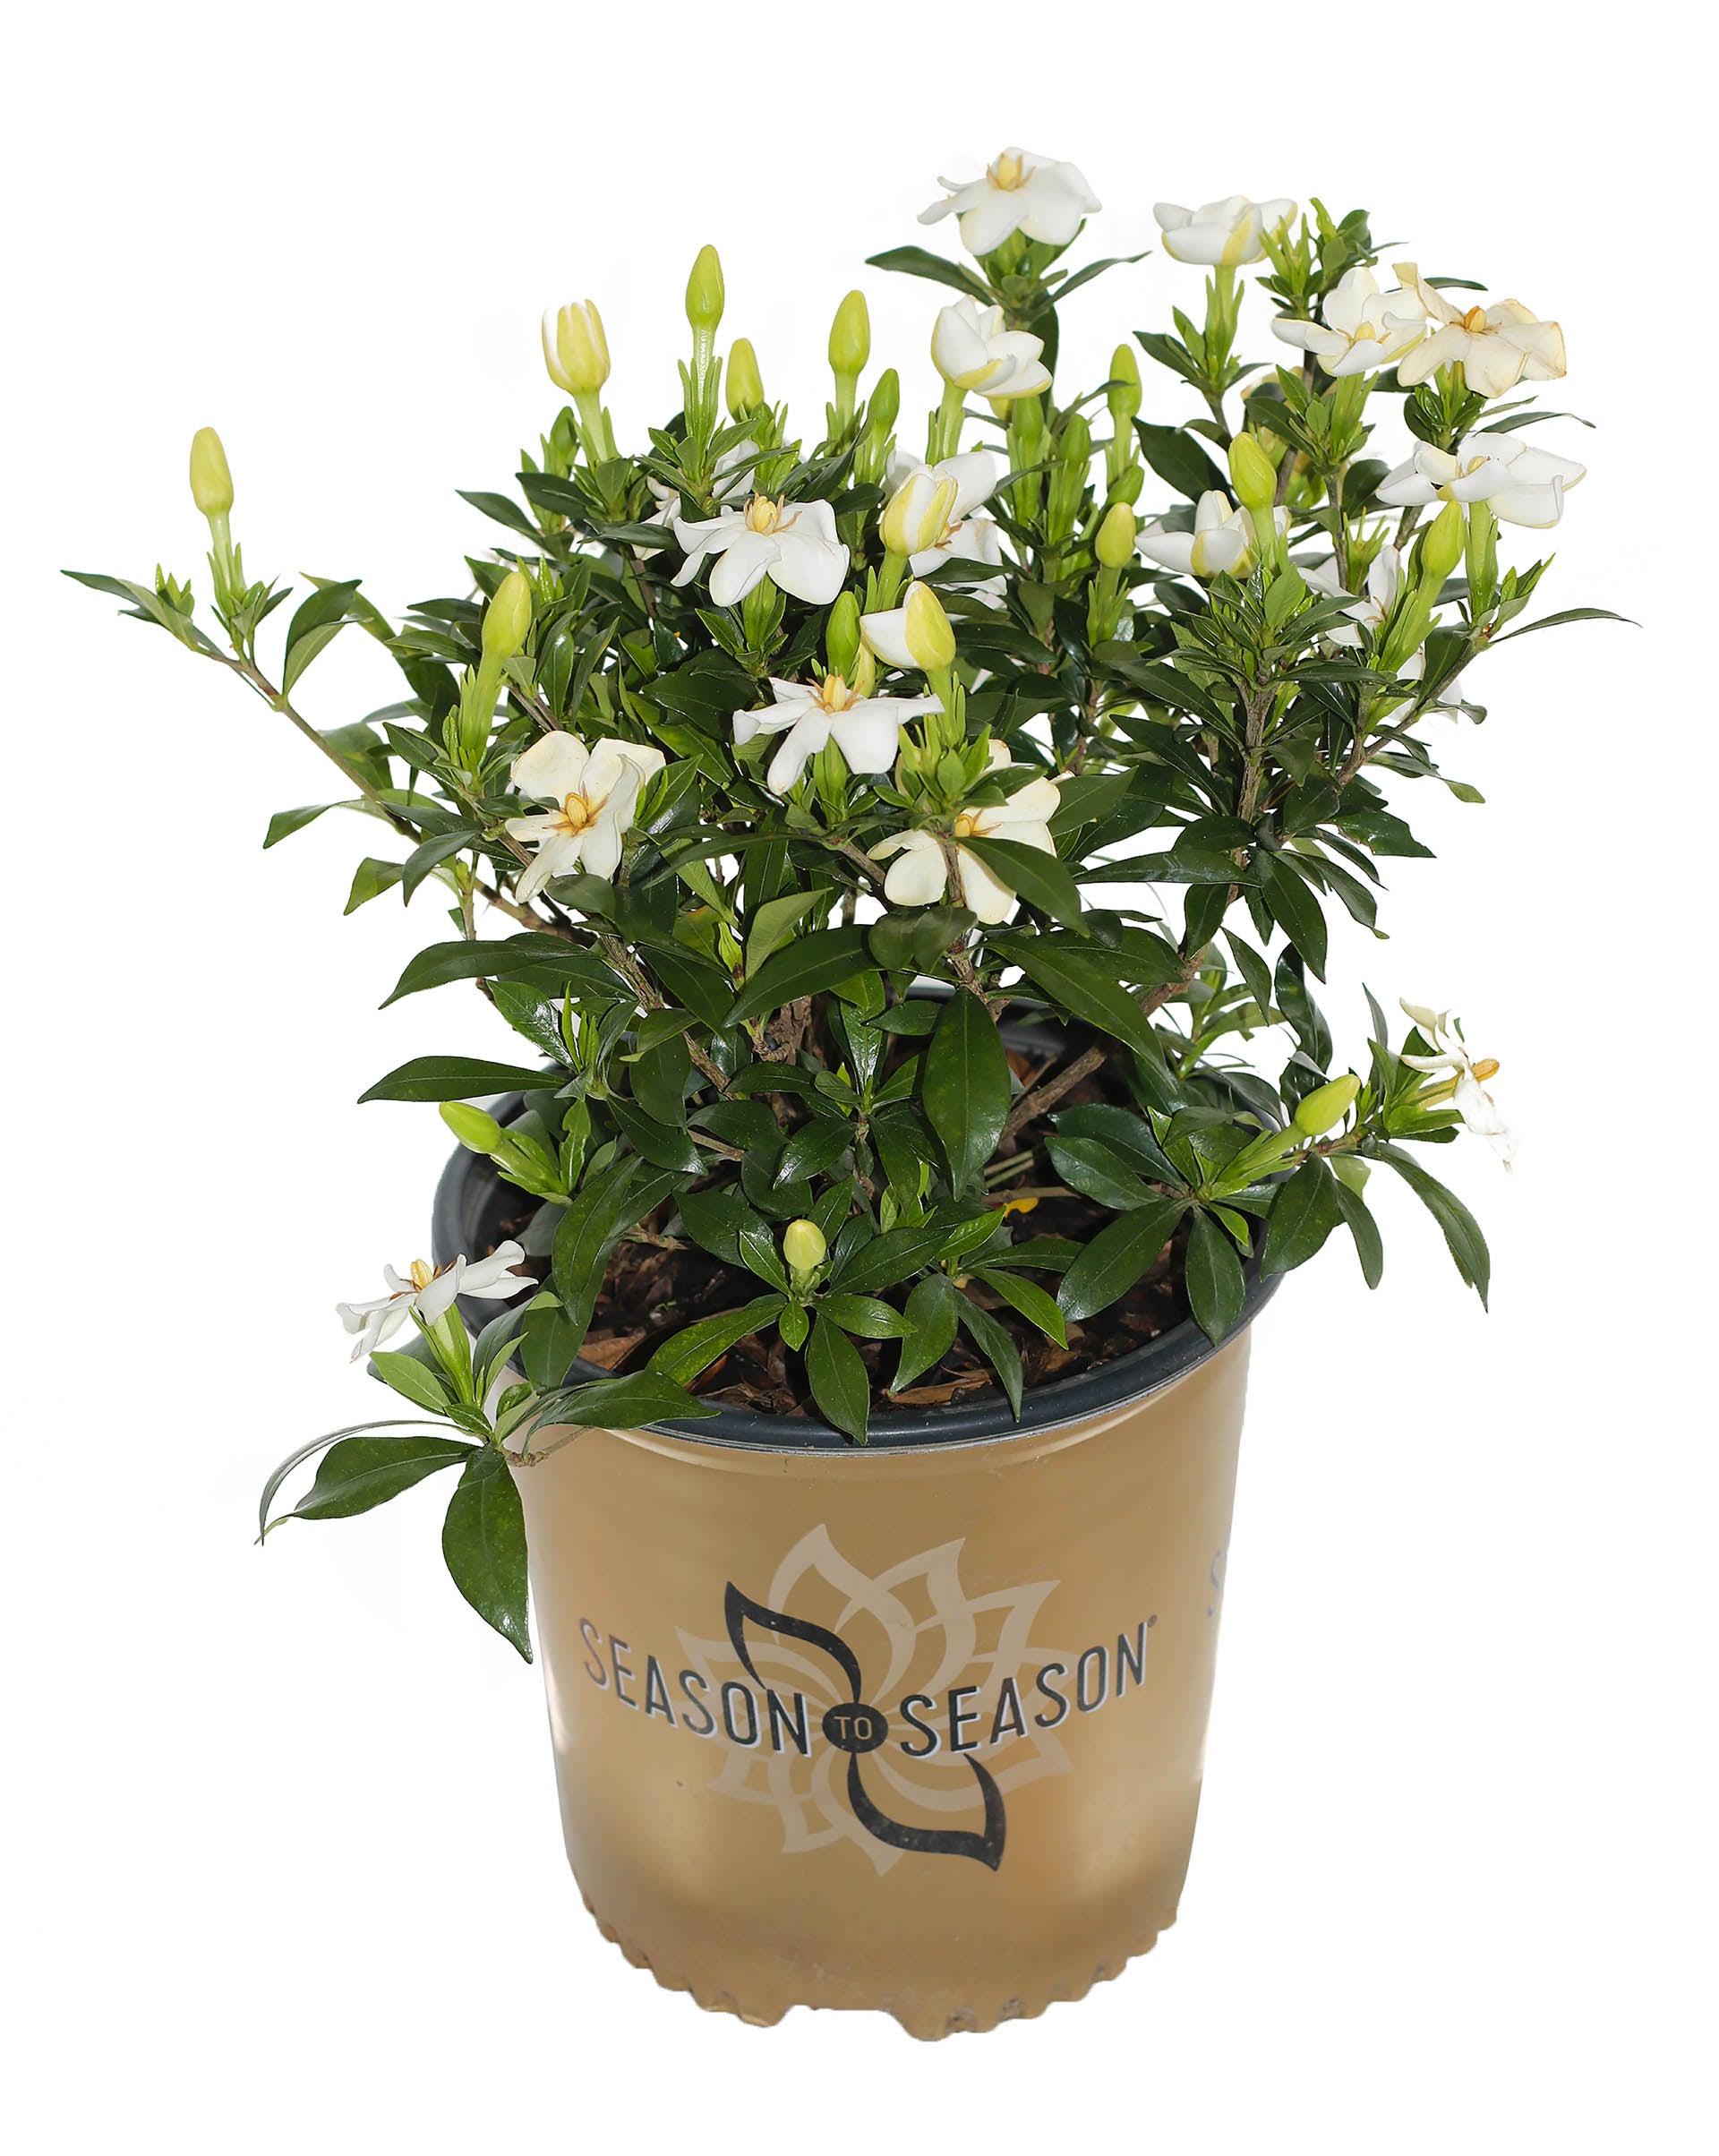 Sweetheart™ Gardenia Evergreen Shrub - 2 Gallon